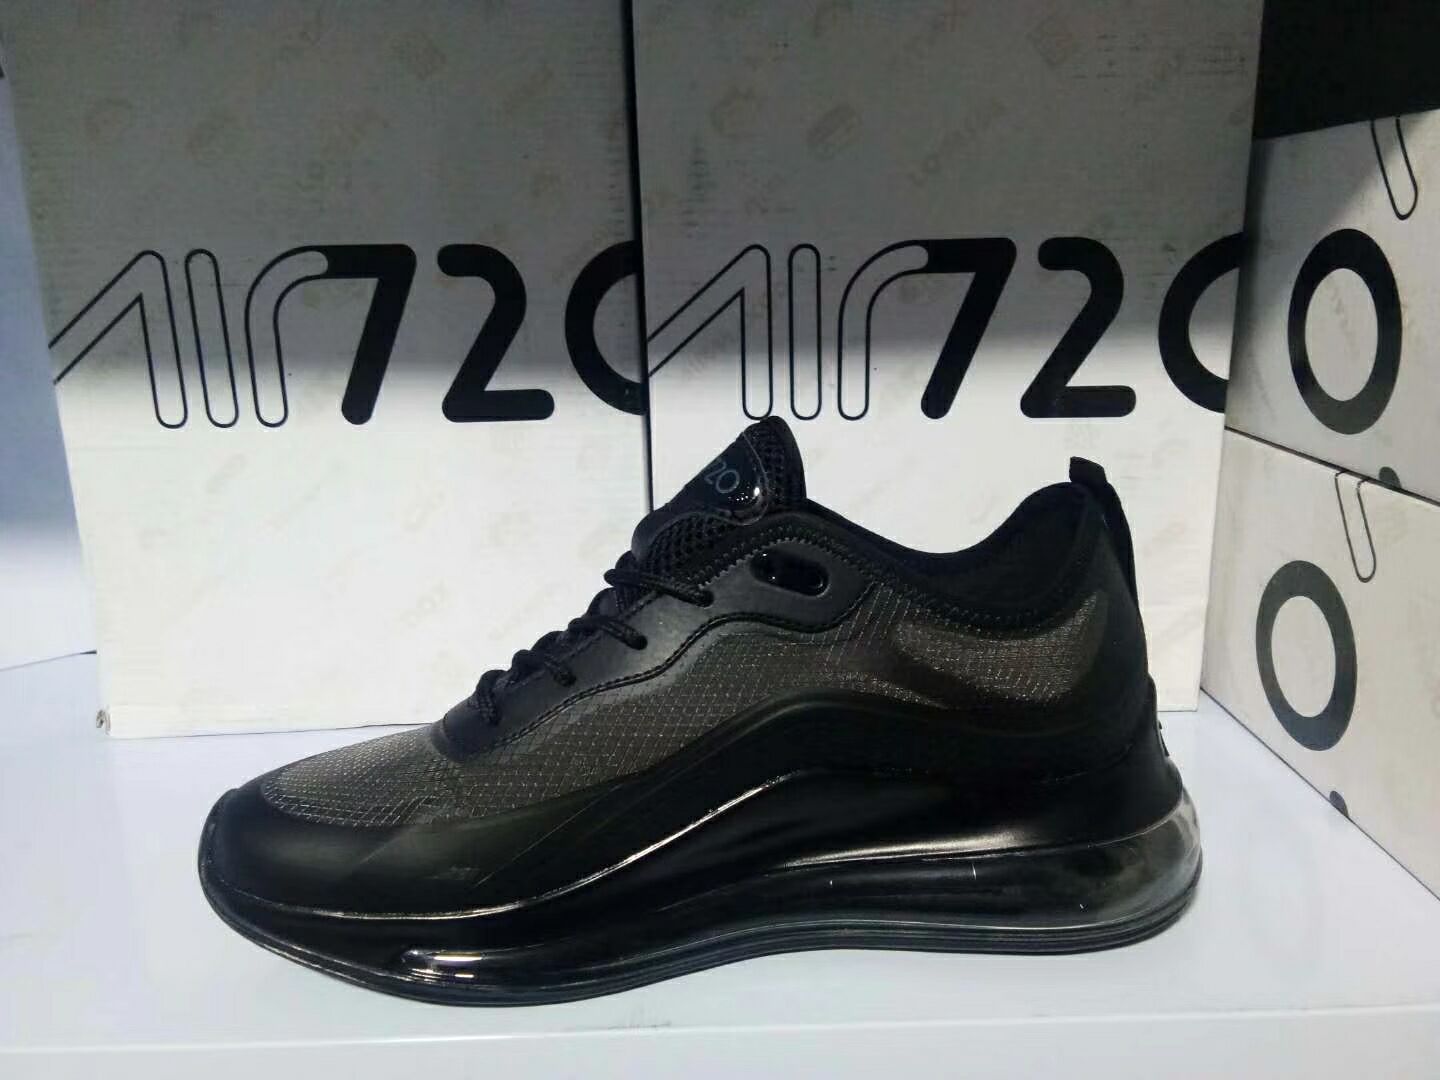 Nike Air Max 720 II All Black Shoes